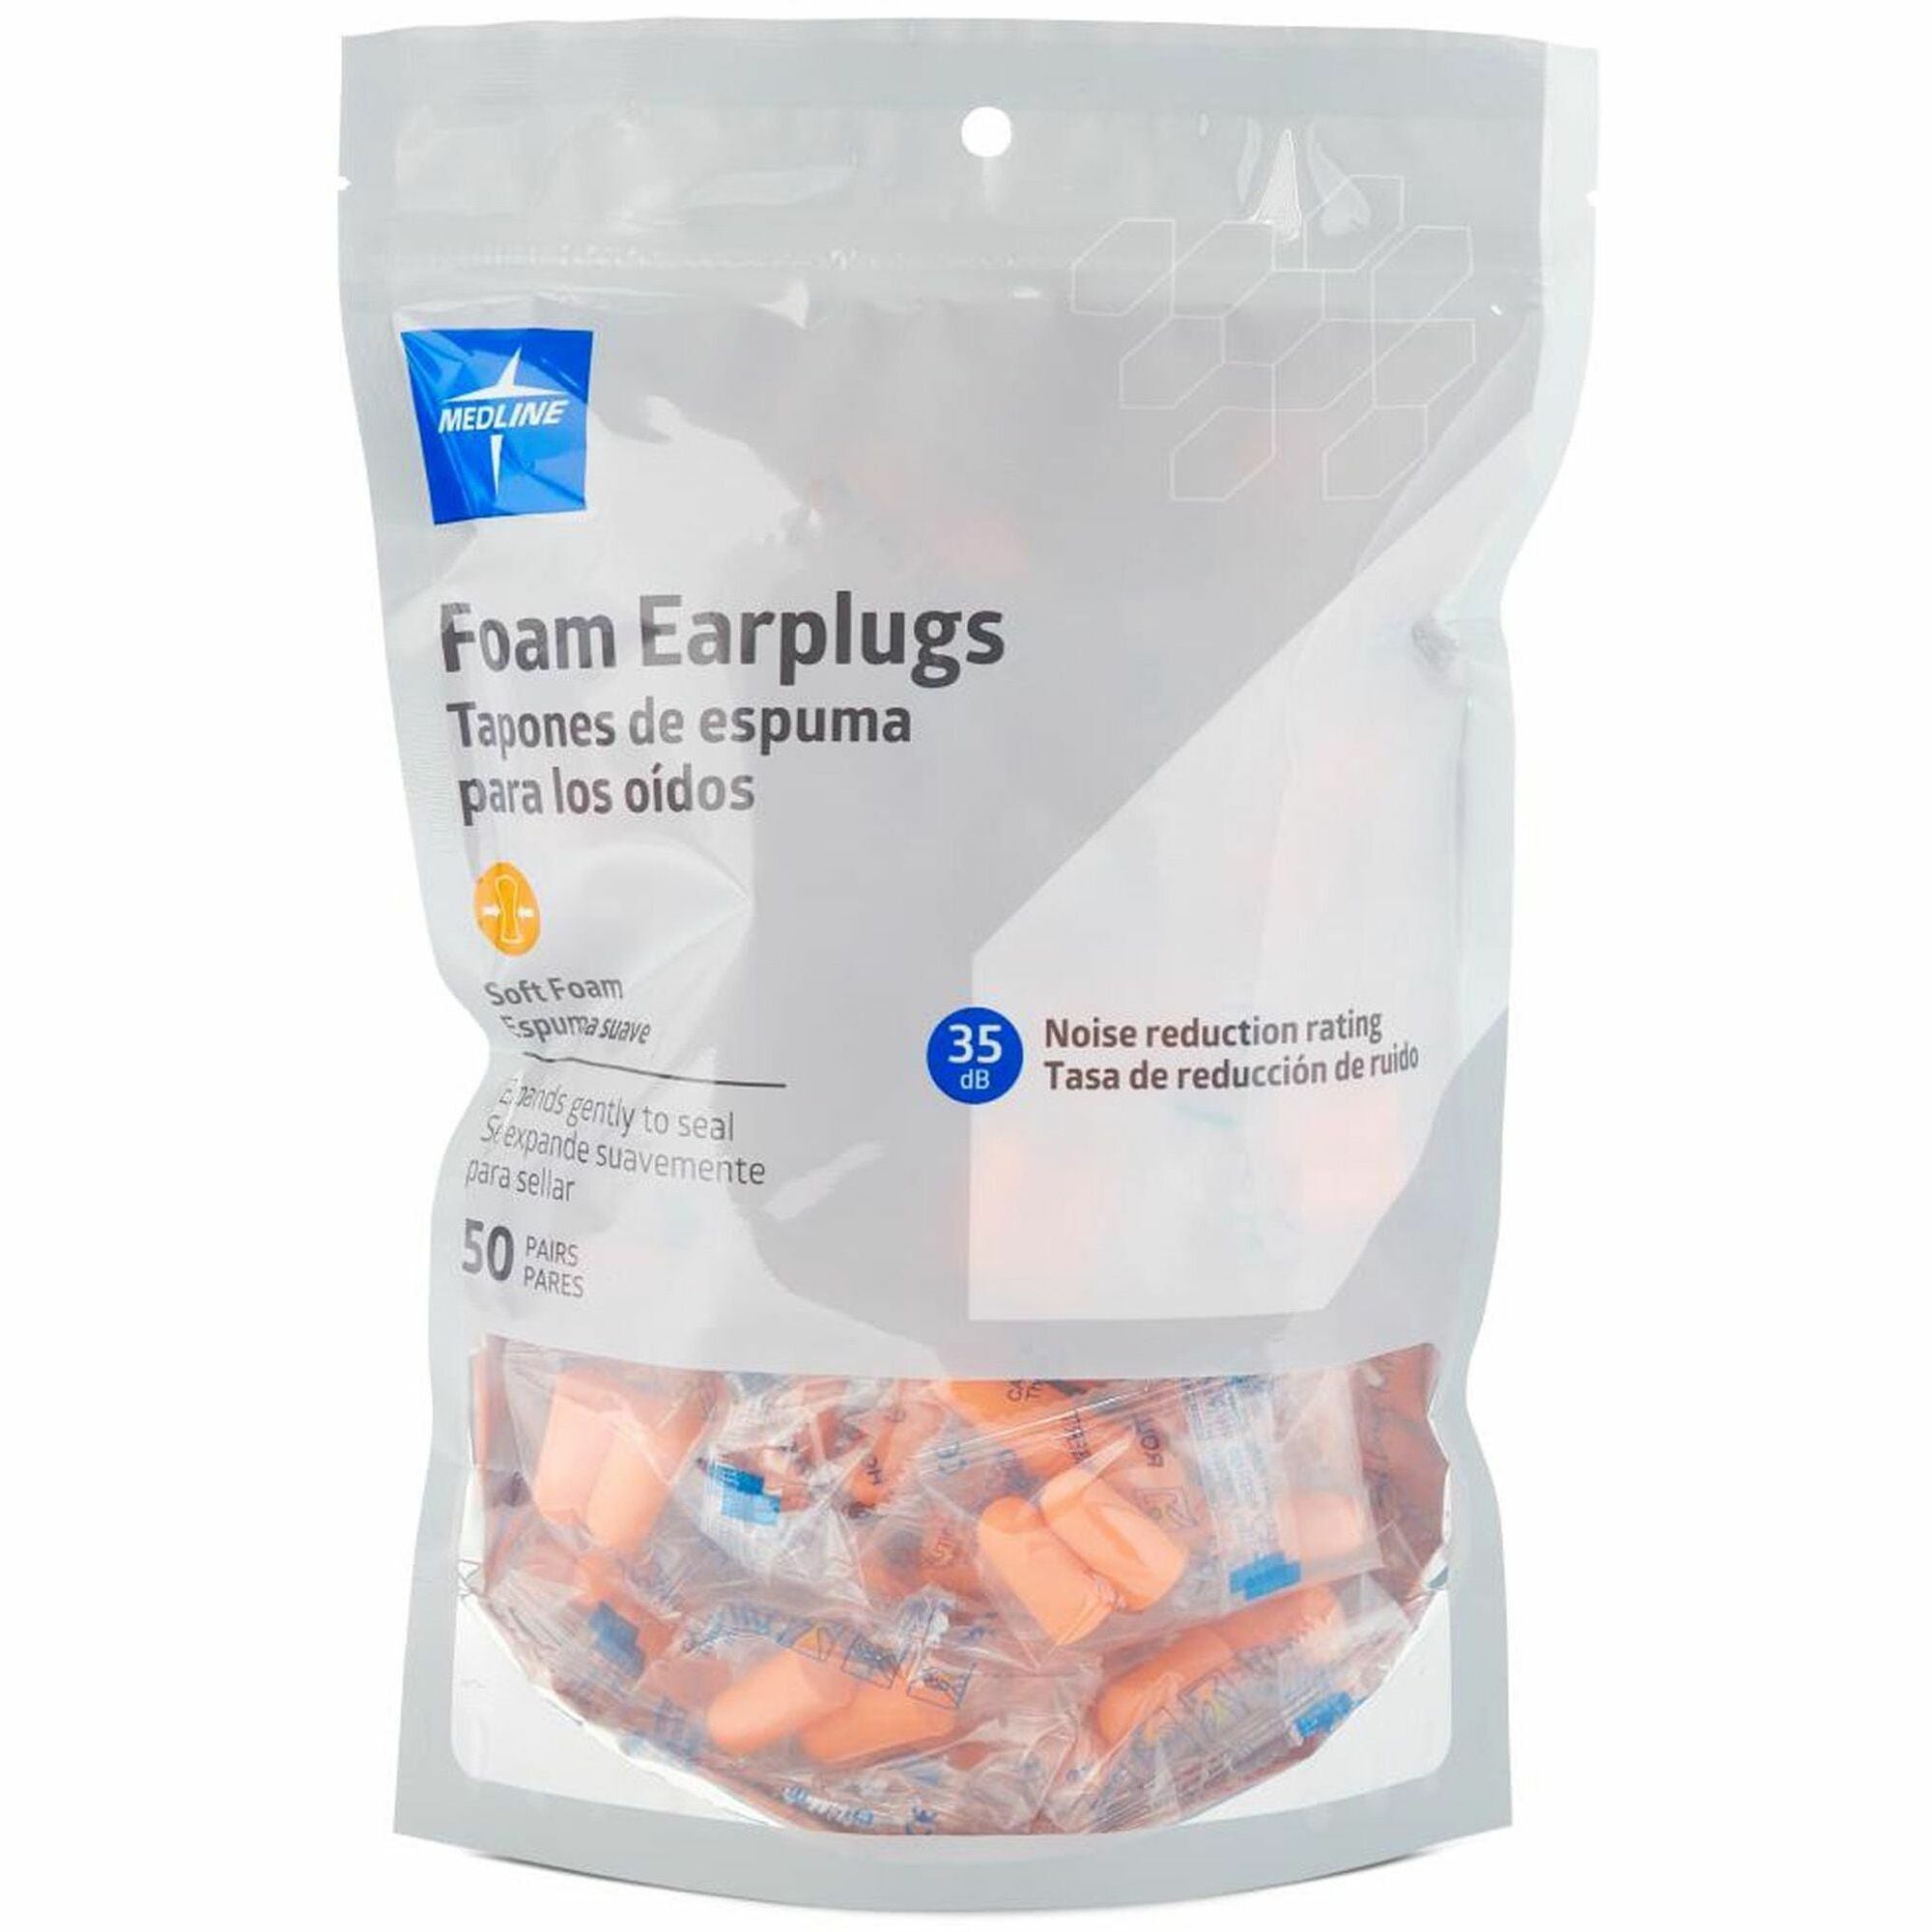 medline-high-fidelity-foam-earplugs-recommended-for-ear-35-noise-reduction-rating-protection-high-fidelity-foam-orange-30-carton_miimdsearplugct - 1